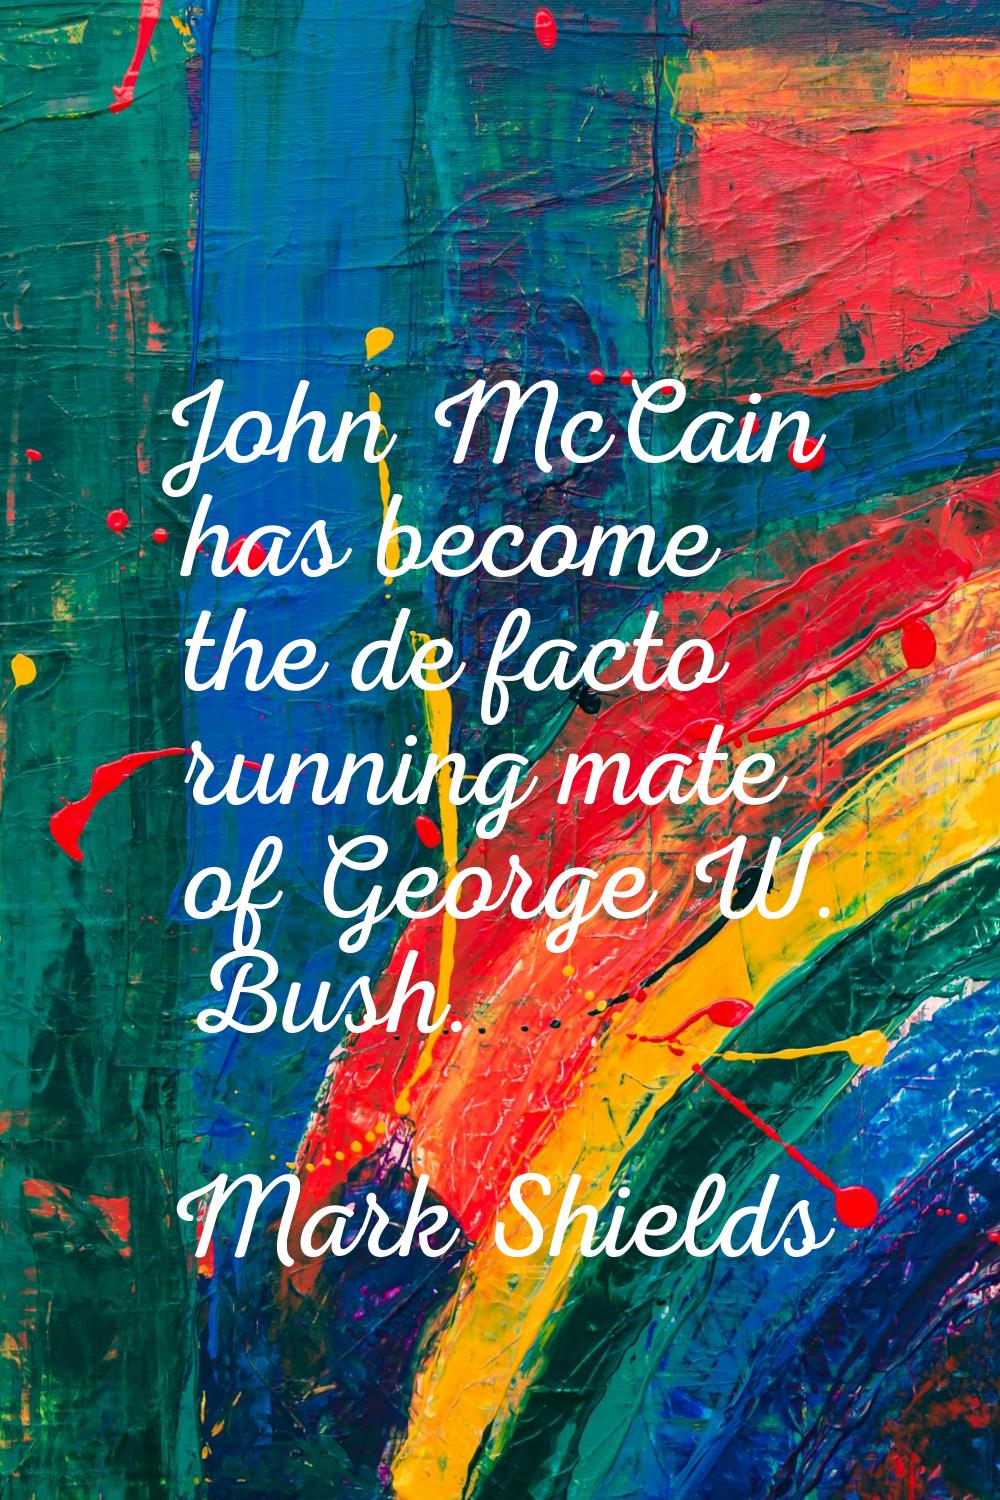 John McCain has become the de facto running mate of George W. Bush.